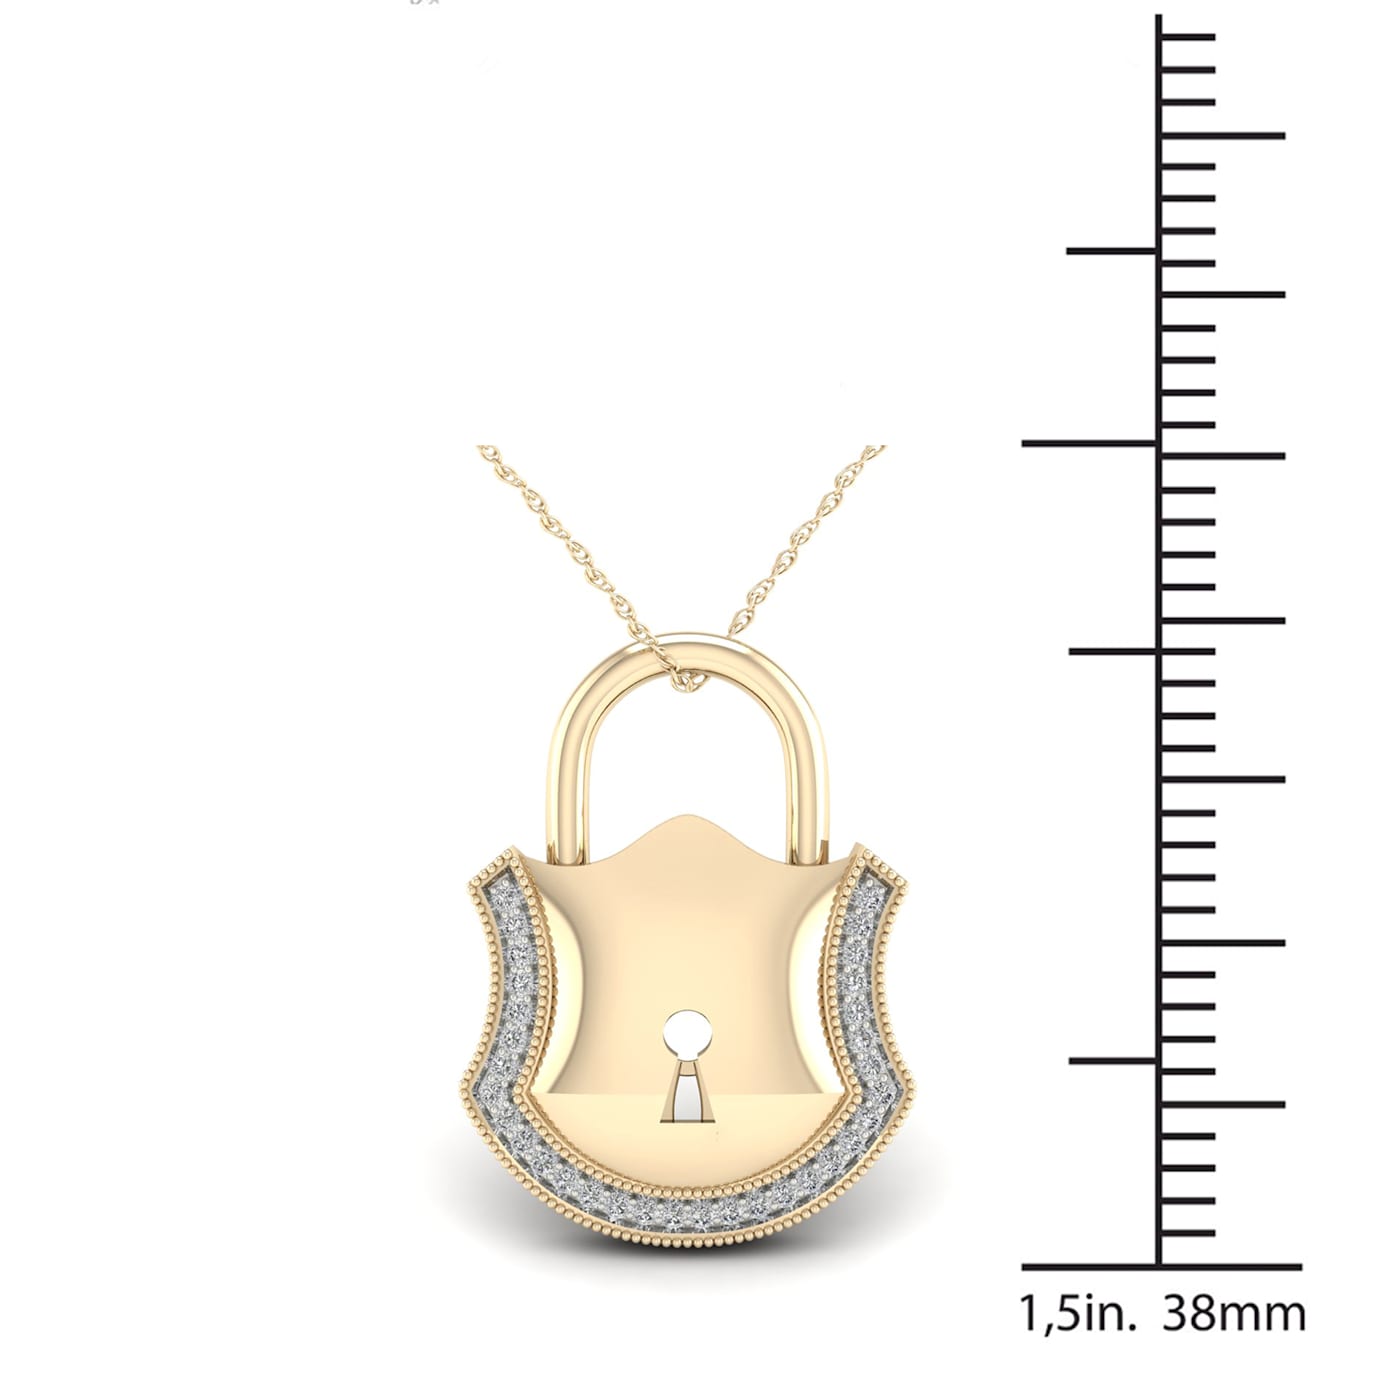 Tiffany & Co. 18K Diamond Emblem Lock Pendant Necklace - 18K